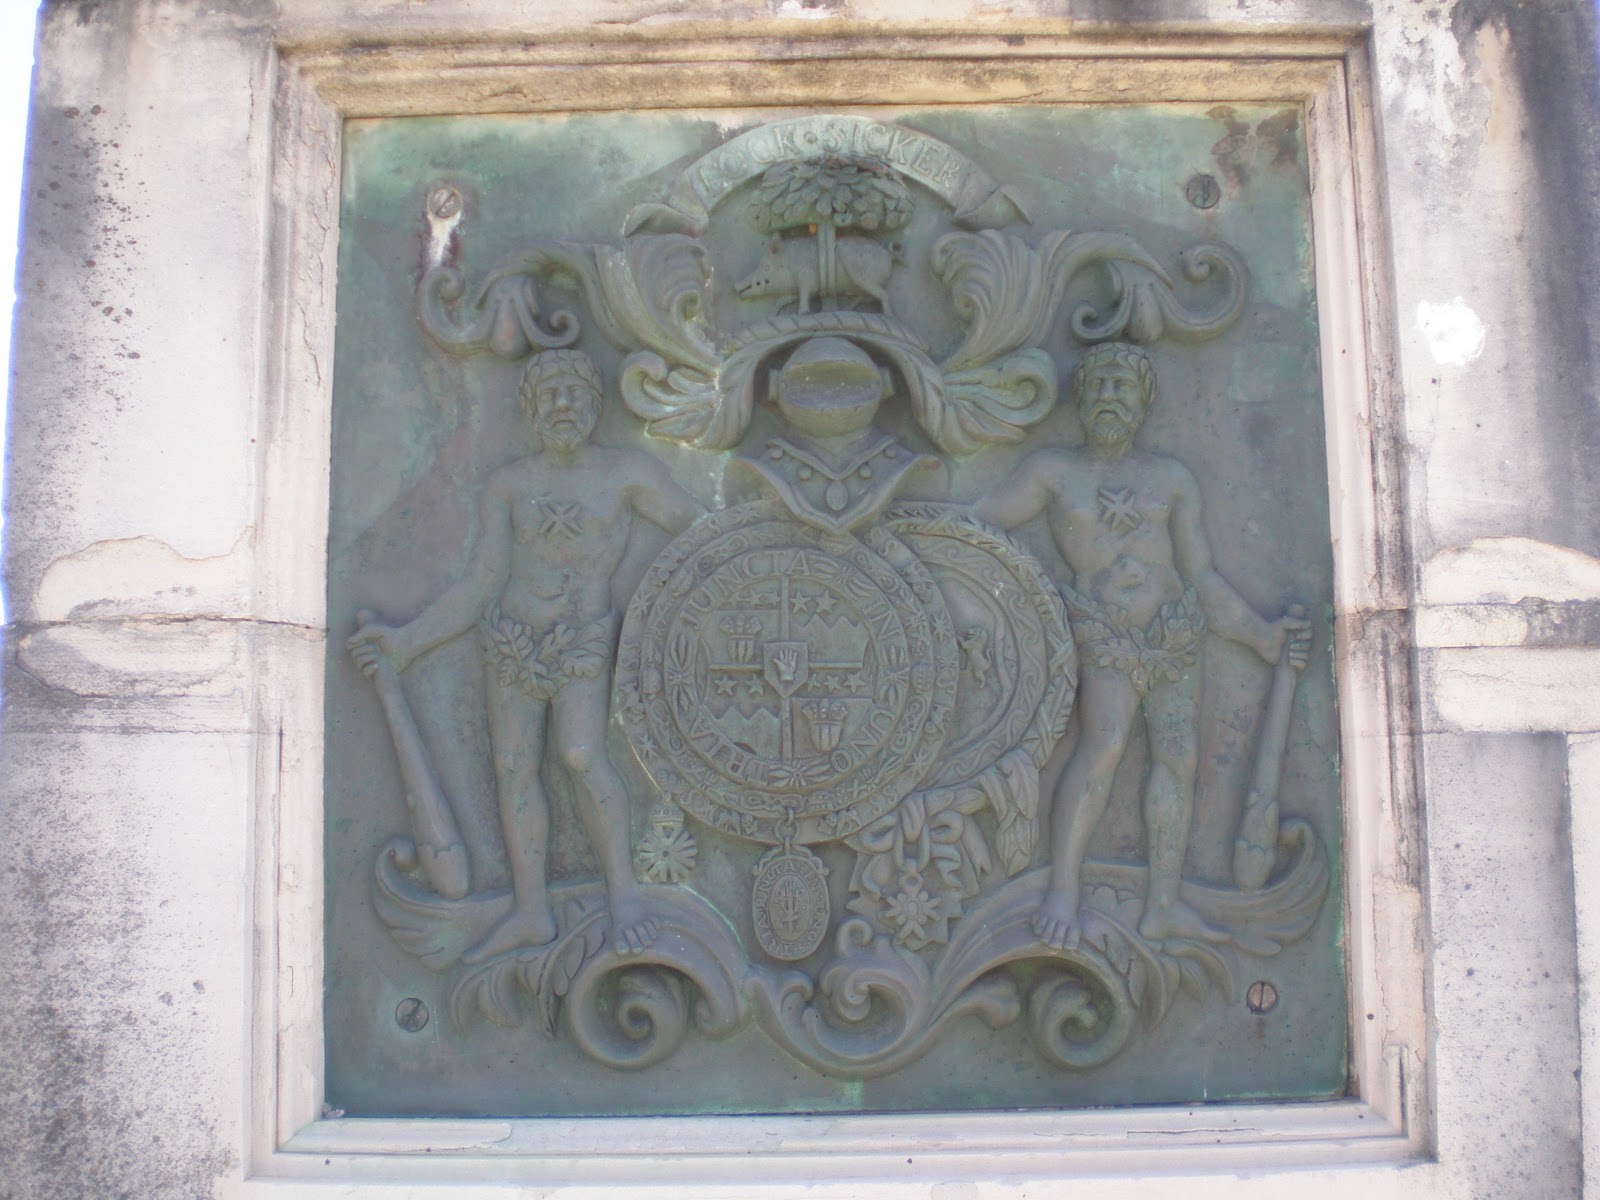 Douglas coat of arms